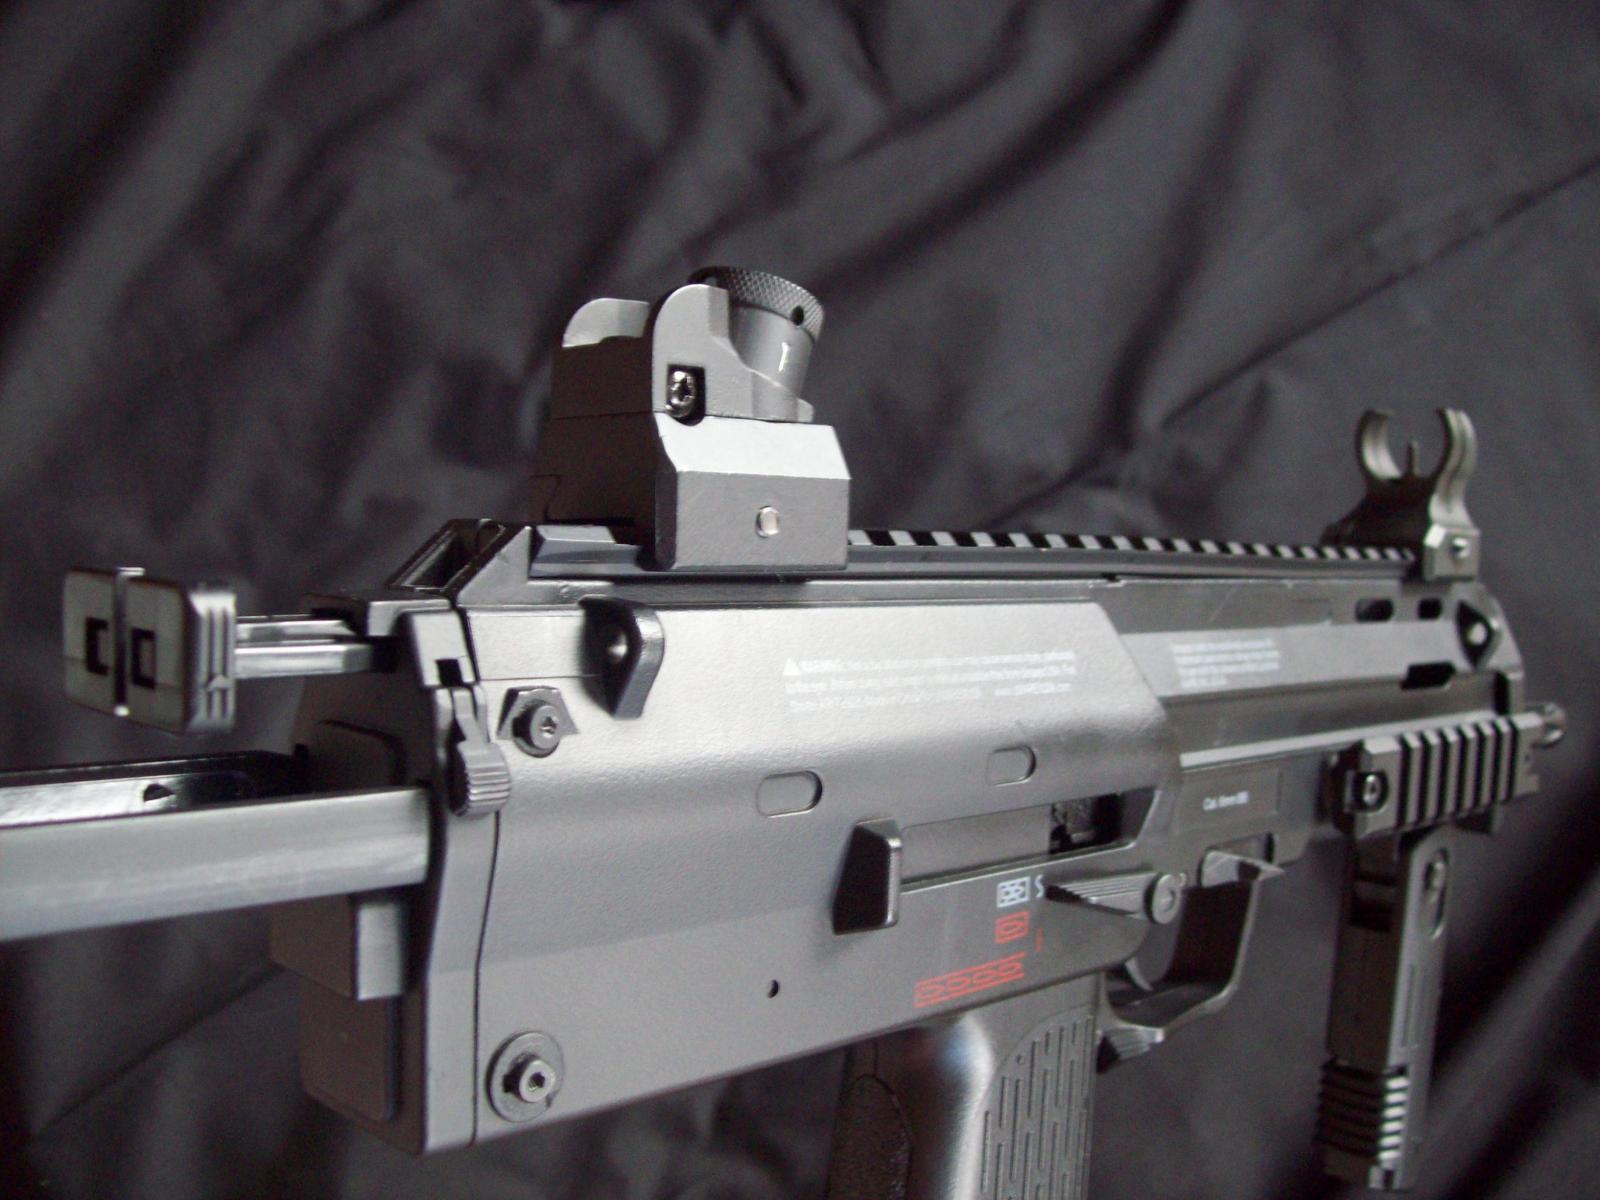 HK 416 Sights